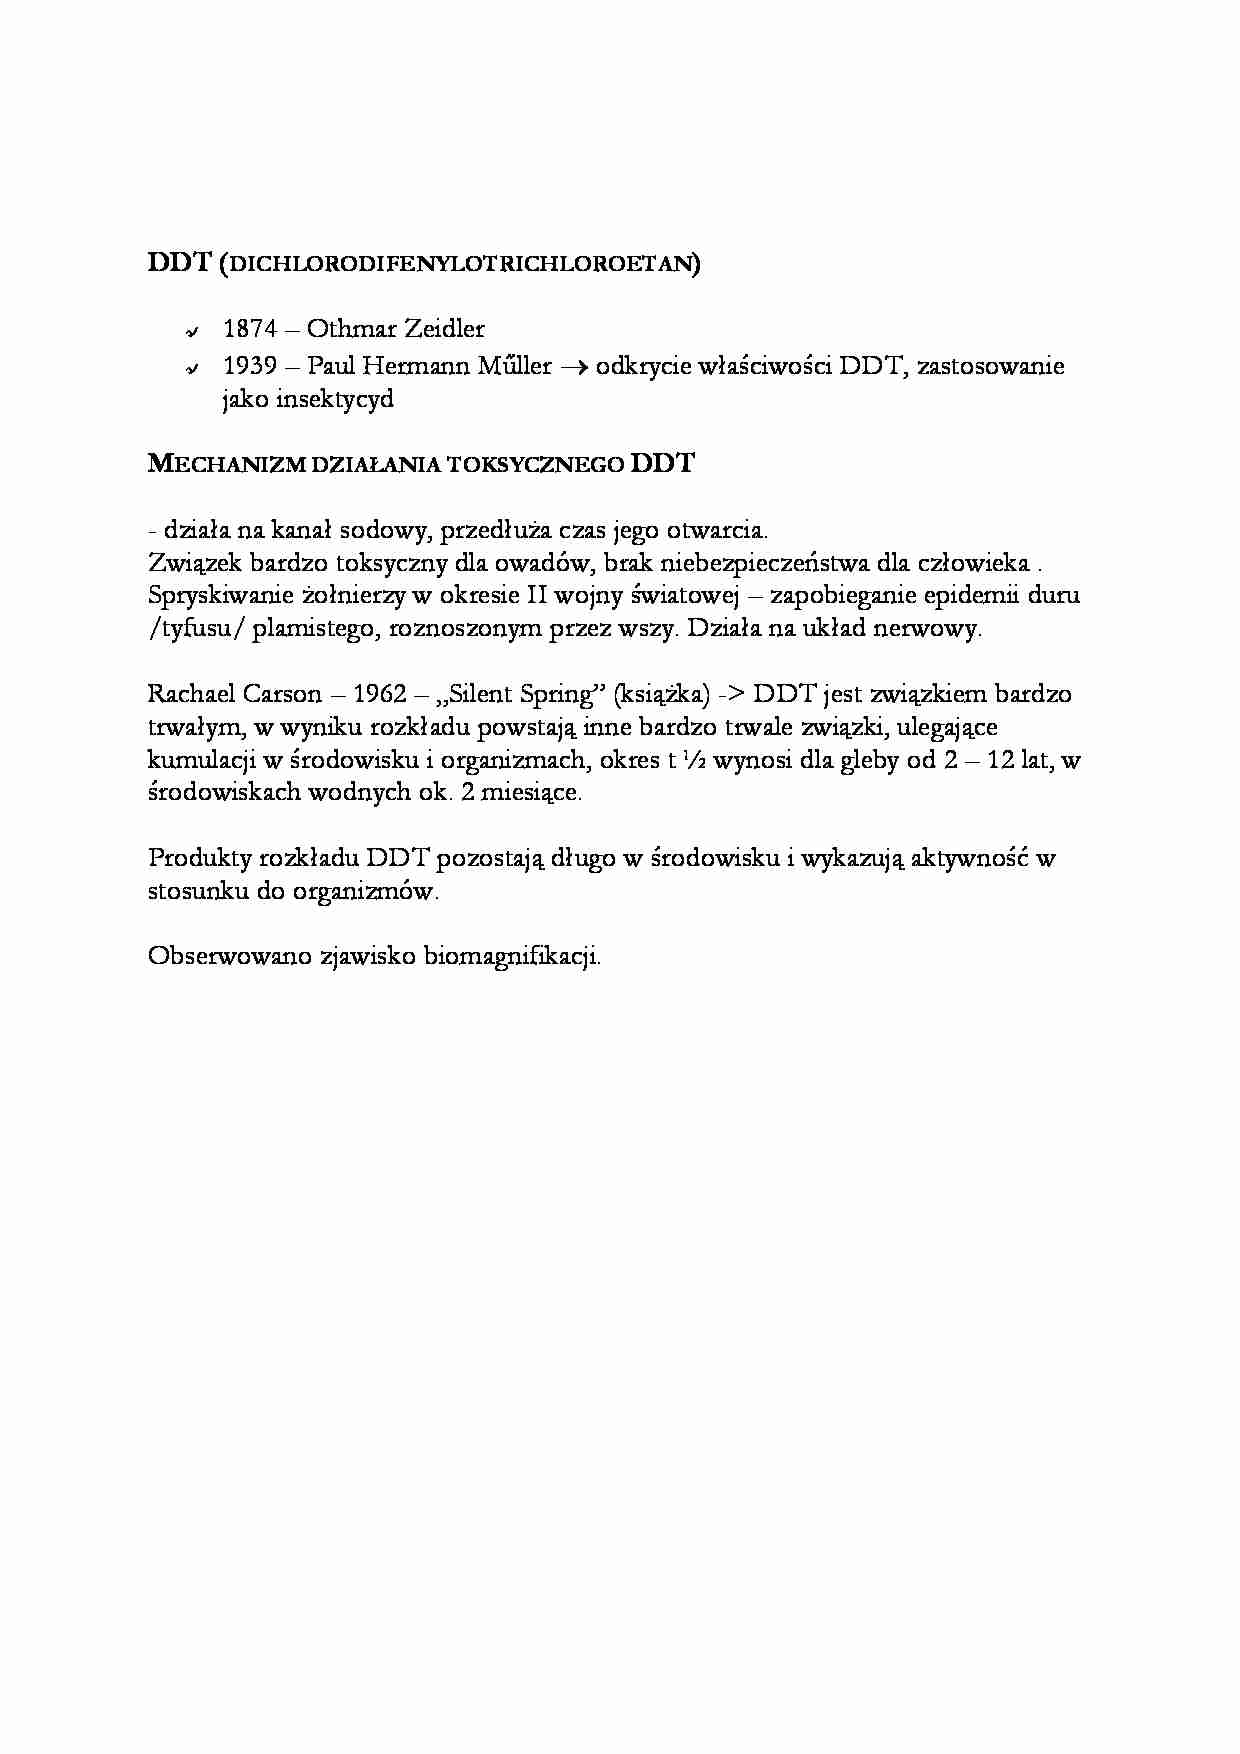 DDT (dichlorodifenylotrichloroetan) - wykład - strona 1